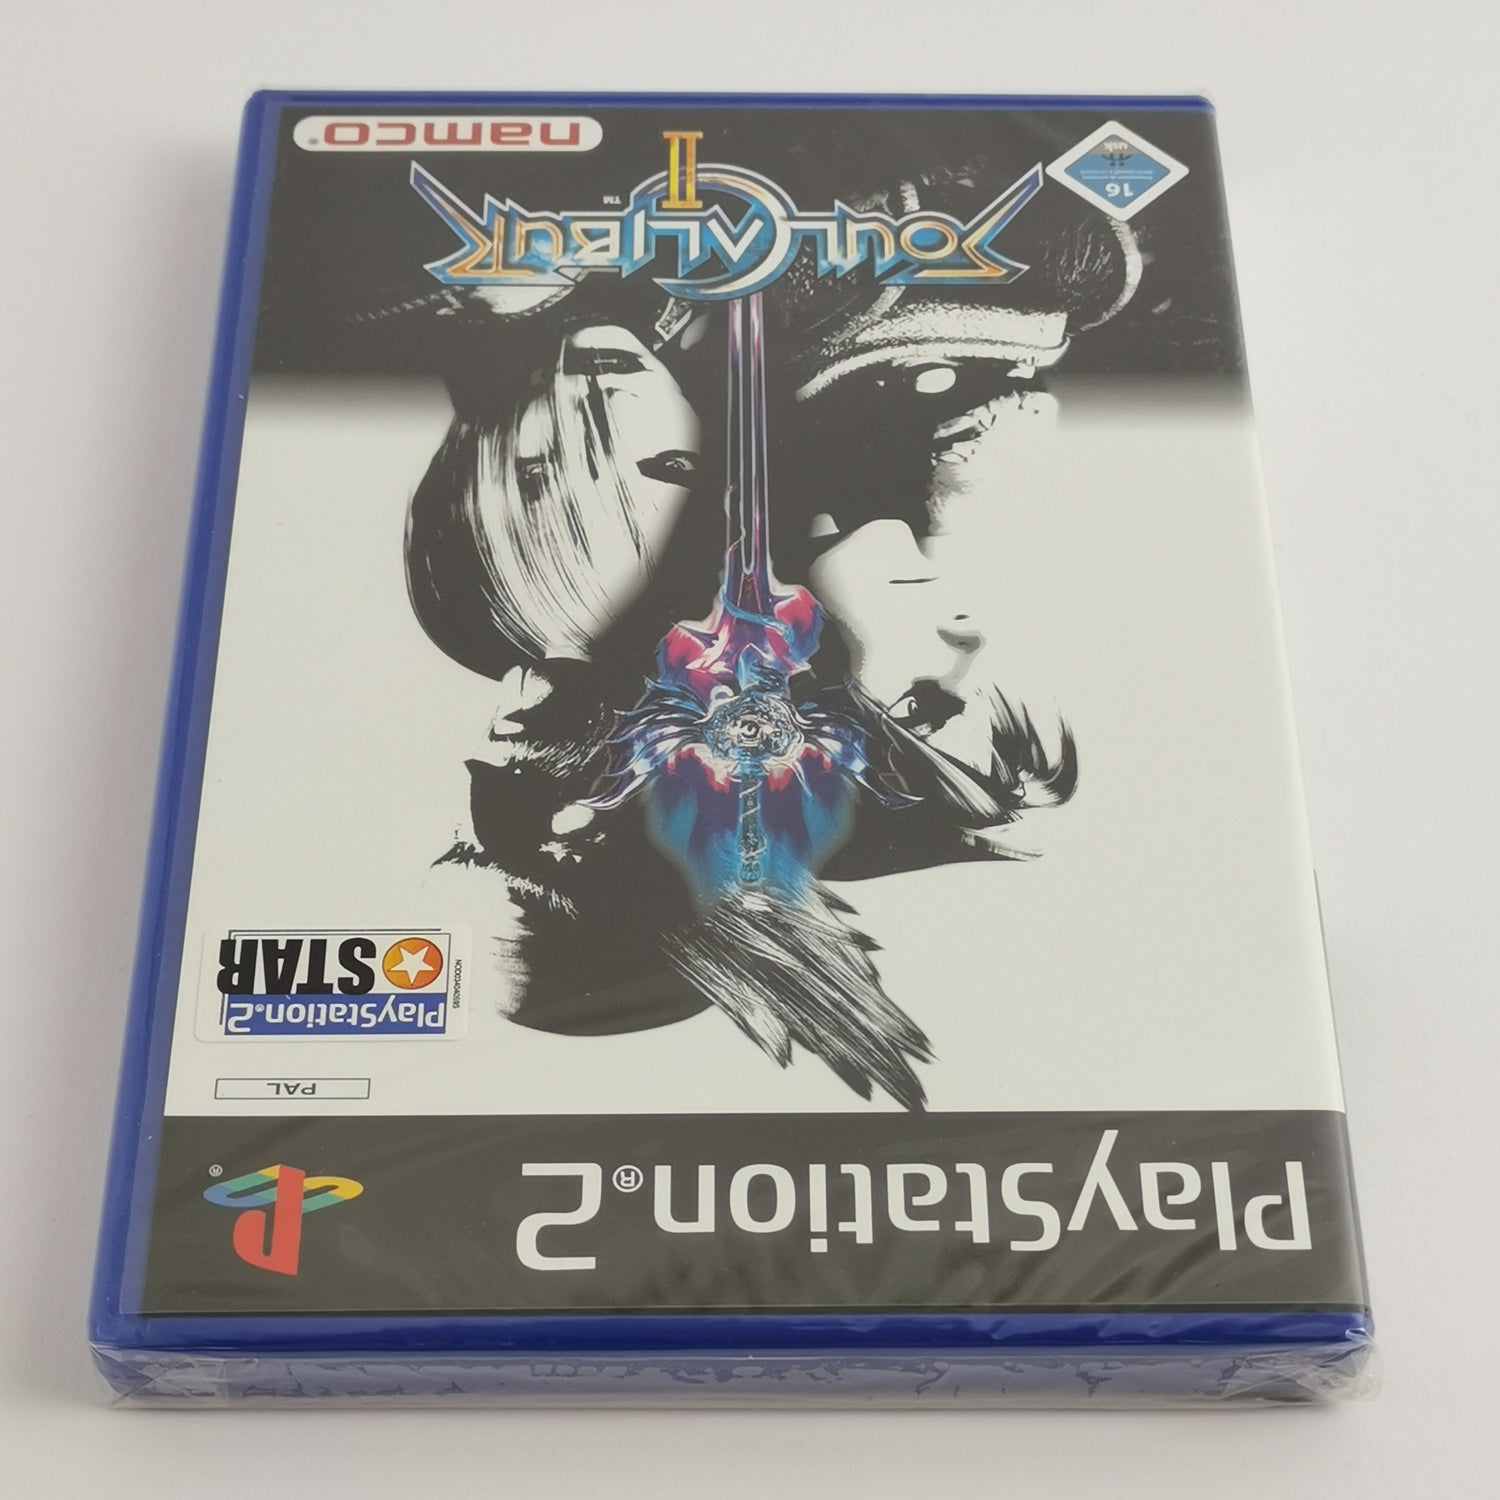 Sony Playstation 2 Game: Soul Calibur II 2 - Namco | PS2 OVP PAL - NEW SEALED